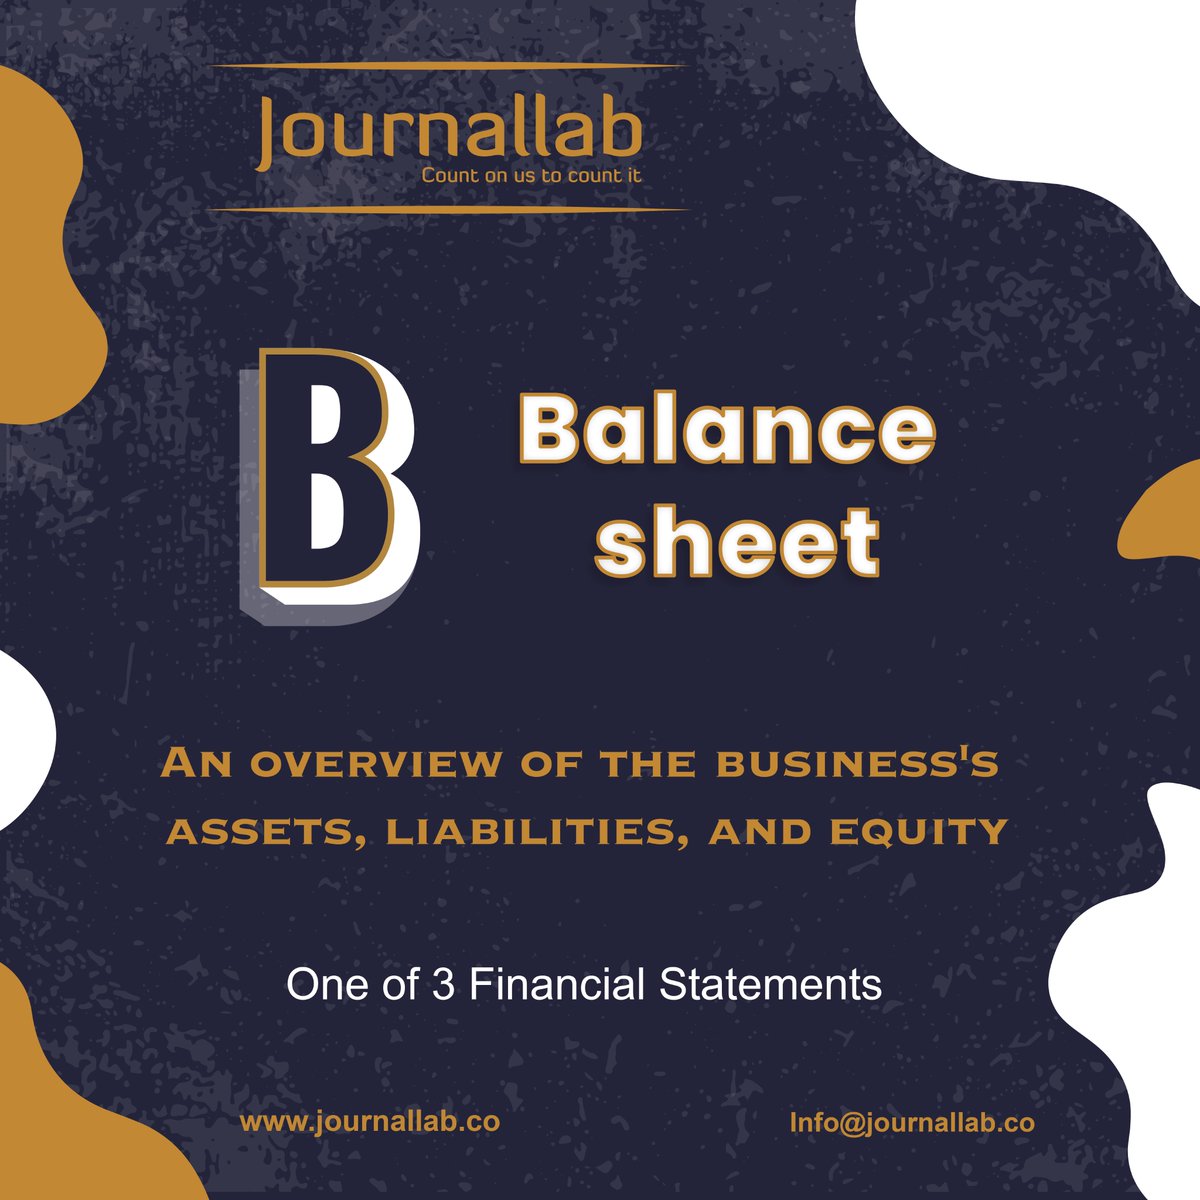 #BalanceSheet #FinancialStatement #Accounting #Finance #Business #CorporateFinance #FinancialReporting #FinancialAnalysis #AssetsLiabilitiesEquity #FinancialManagement